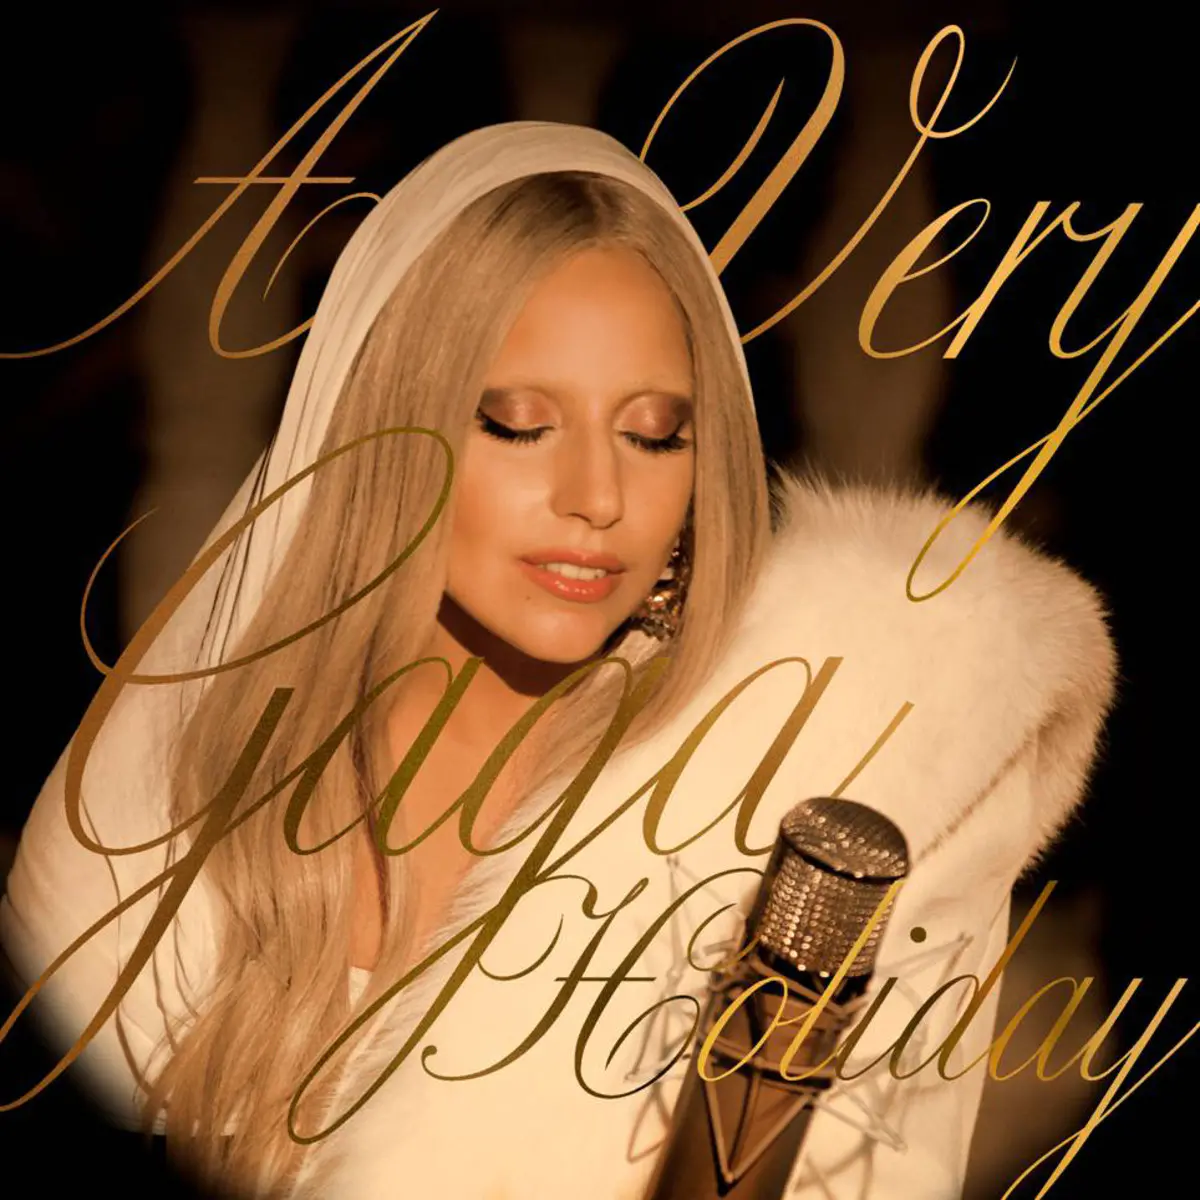 The Edge Of Glory Lyrics In English A Very Gaga Holiday The Edge Of Glory Song Lyrics In English Free Online On Gaana Com